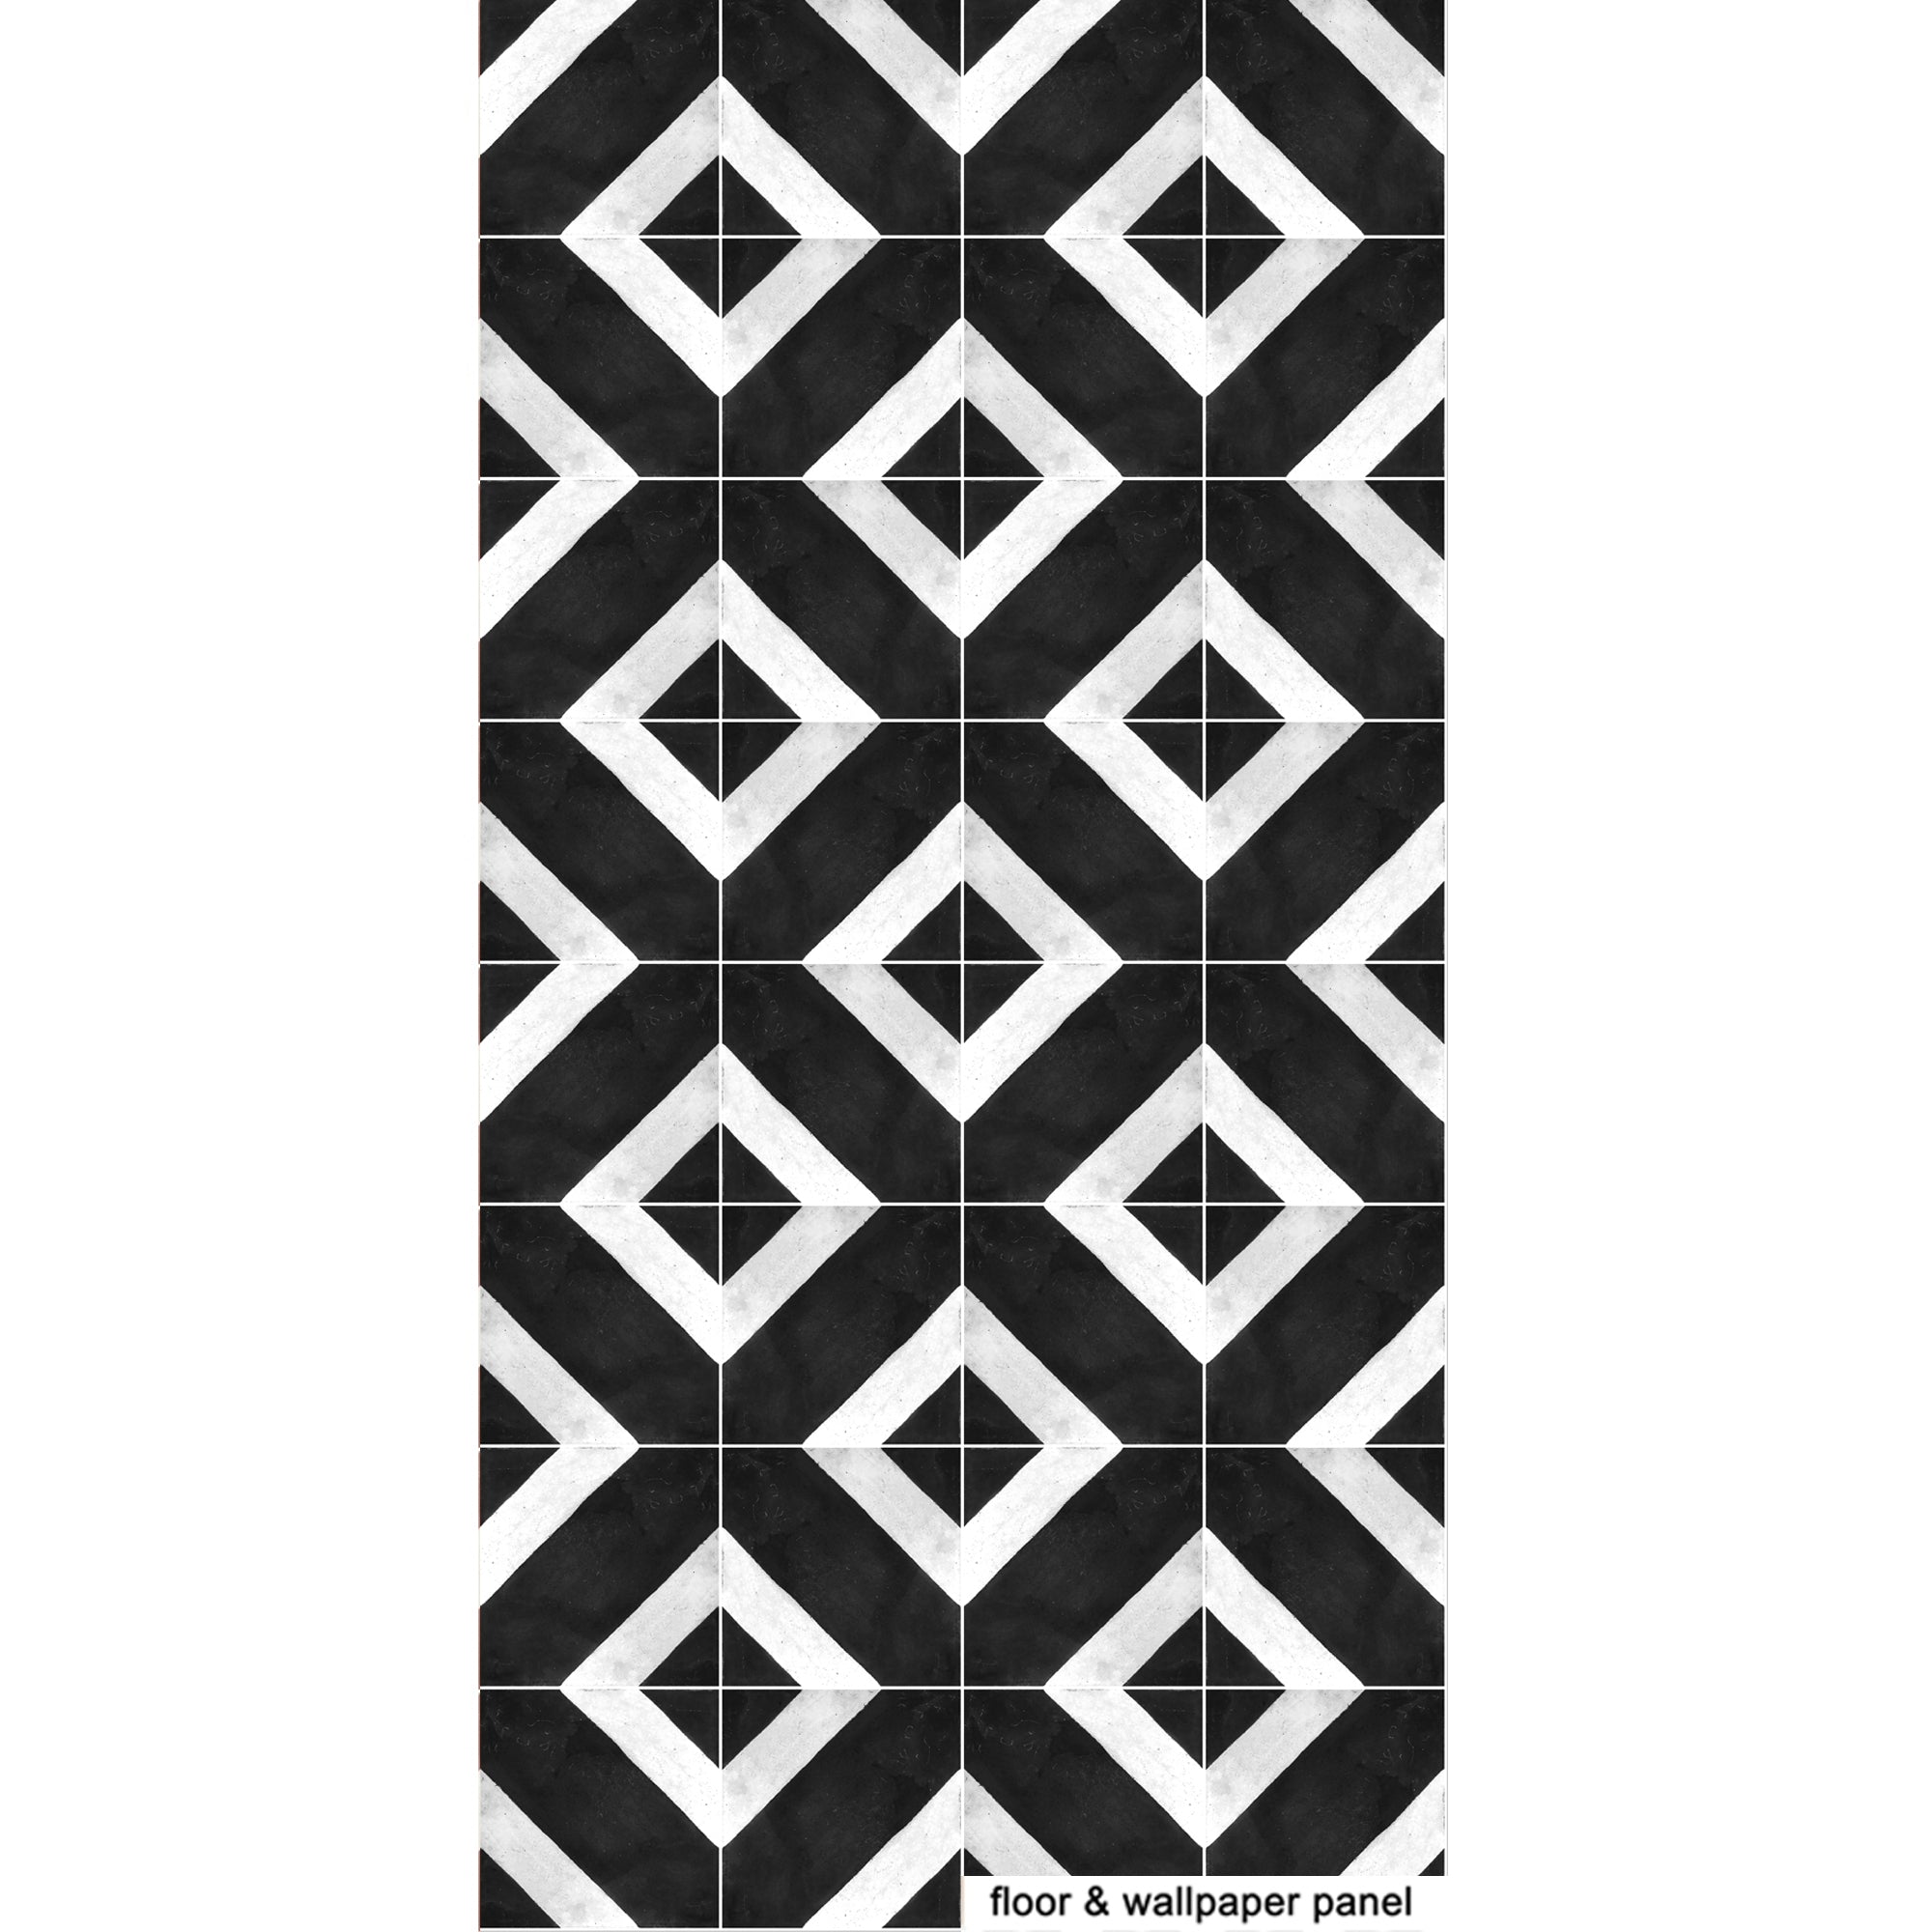 PROMO! Vinyl Floor Sticker Panel of 60 x 120 cm - Salon in Black